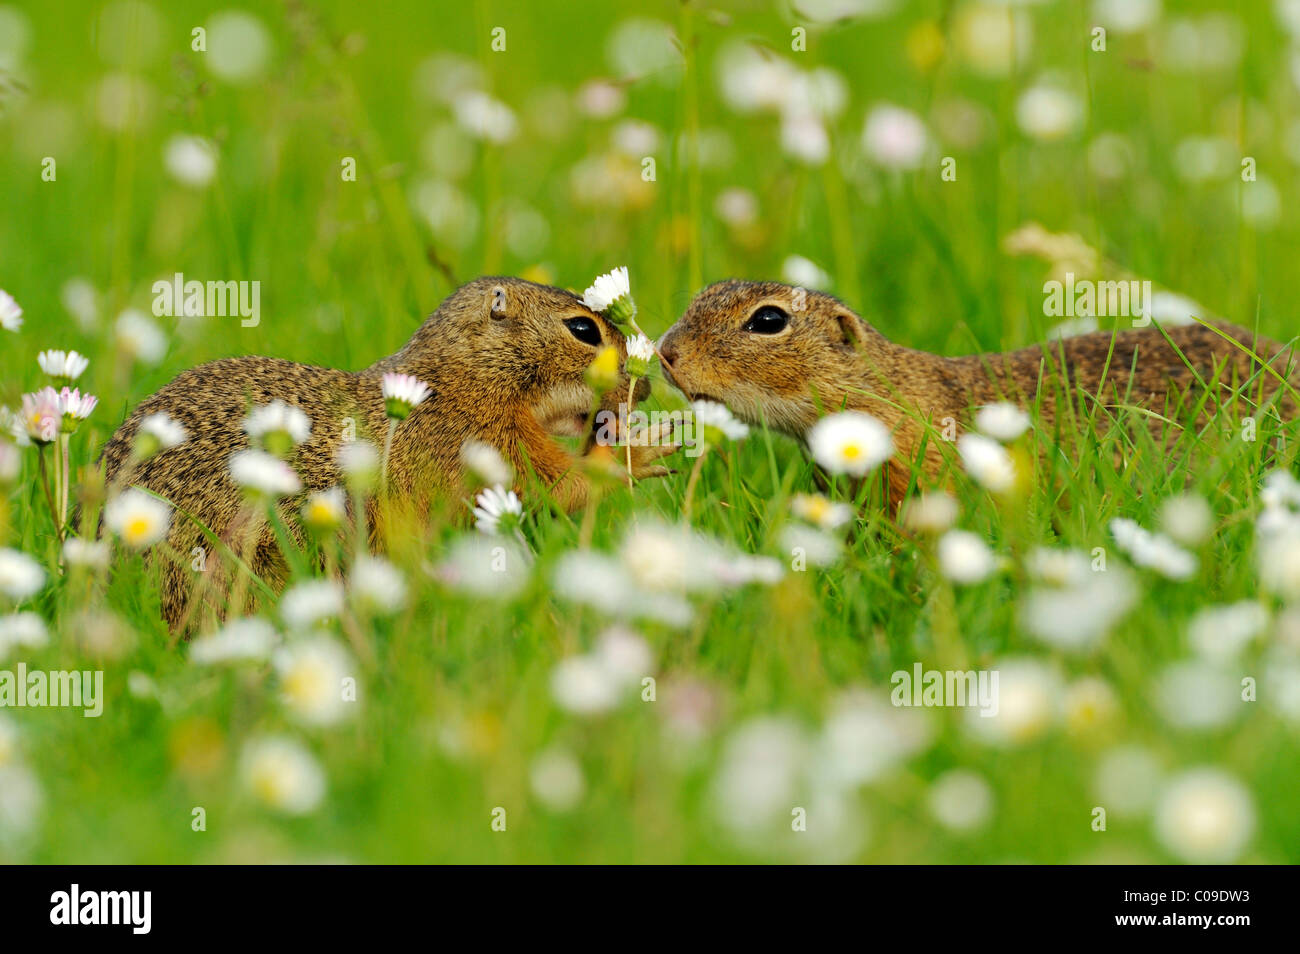 Two European ground squirrels (Spermophilus citellus), fighting for food Stock Photo